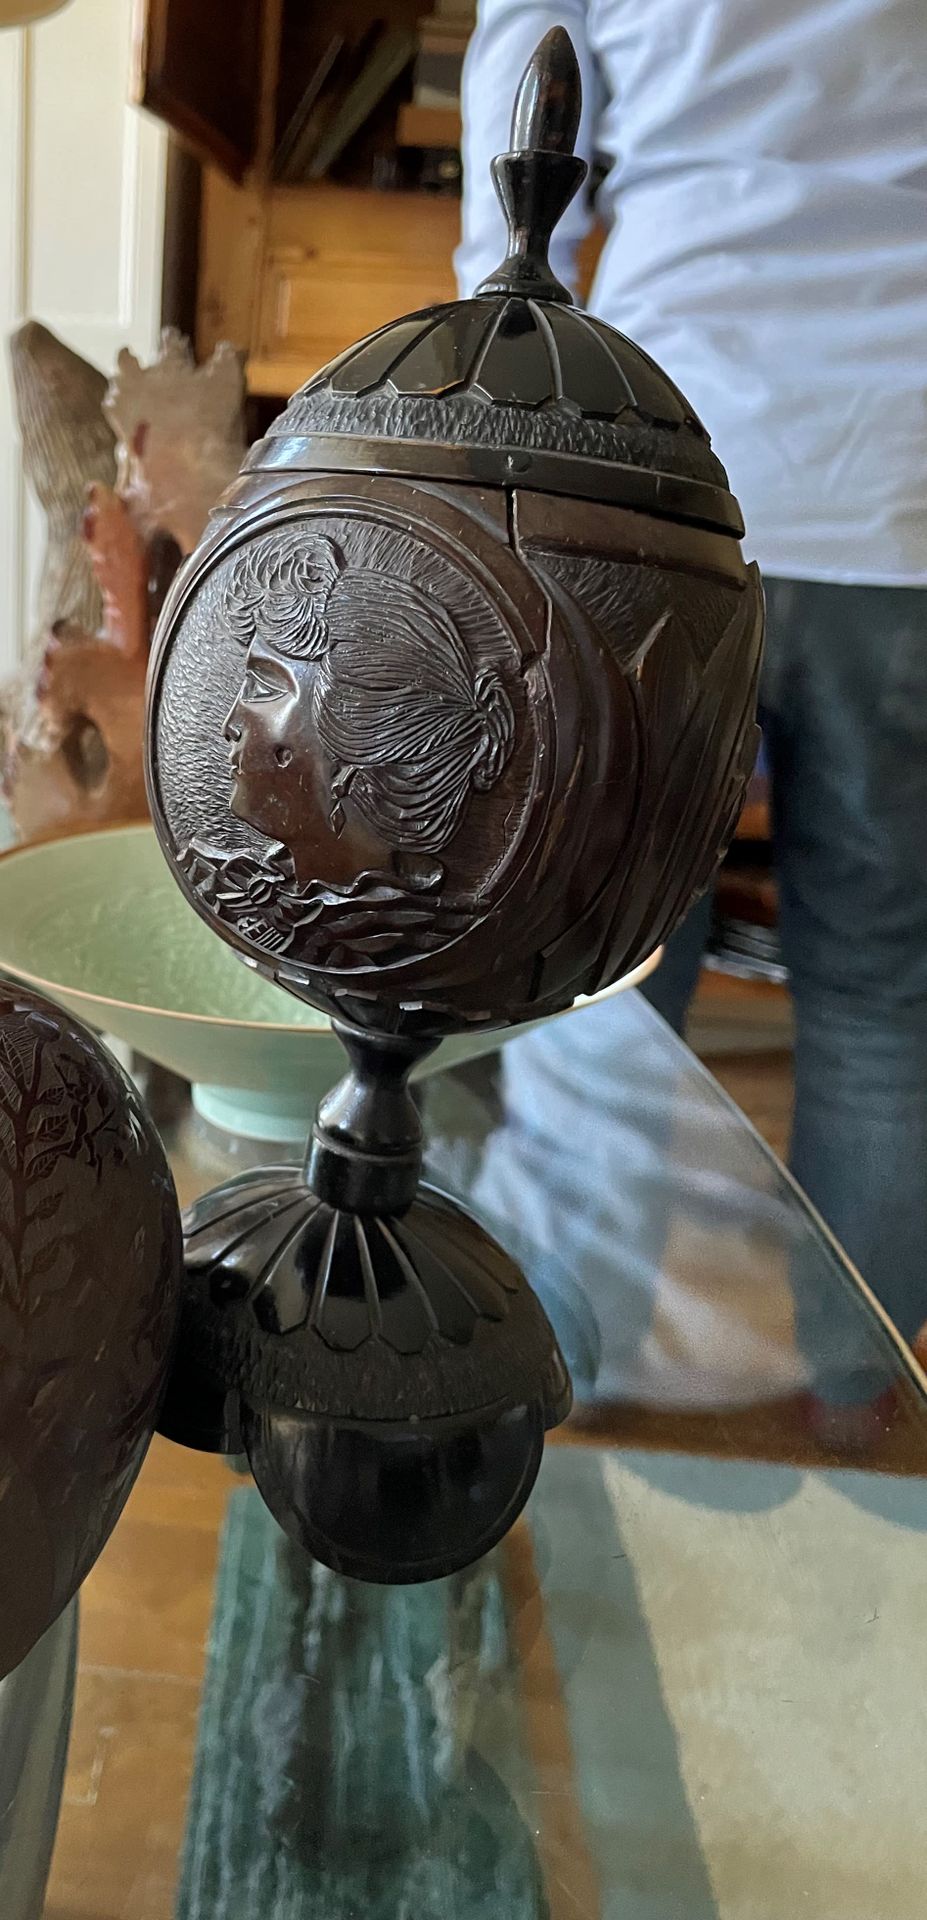 Null 雕刻的椰子
安装在基座上的碗里
雕刻着一个女人的轮廓
H.28厘米